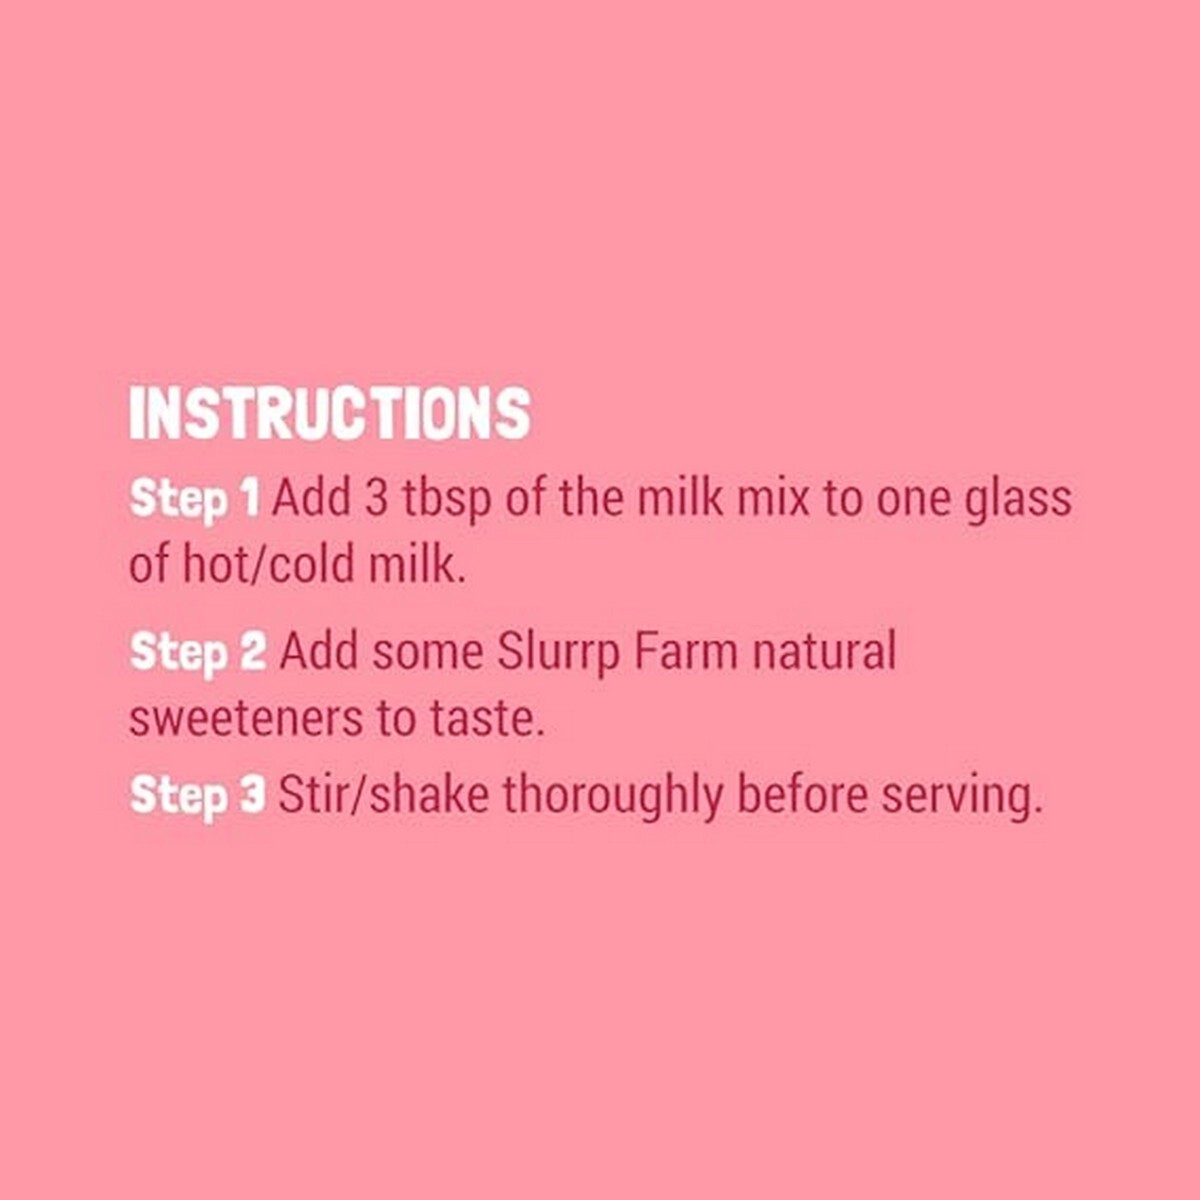 Slurrp Farm Magic Milk Mix Berry 250G